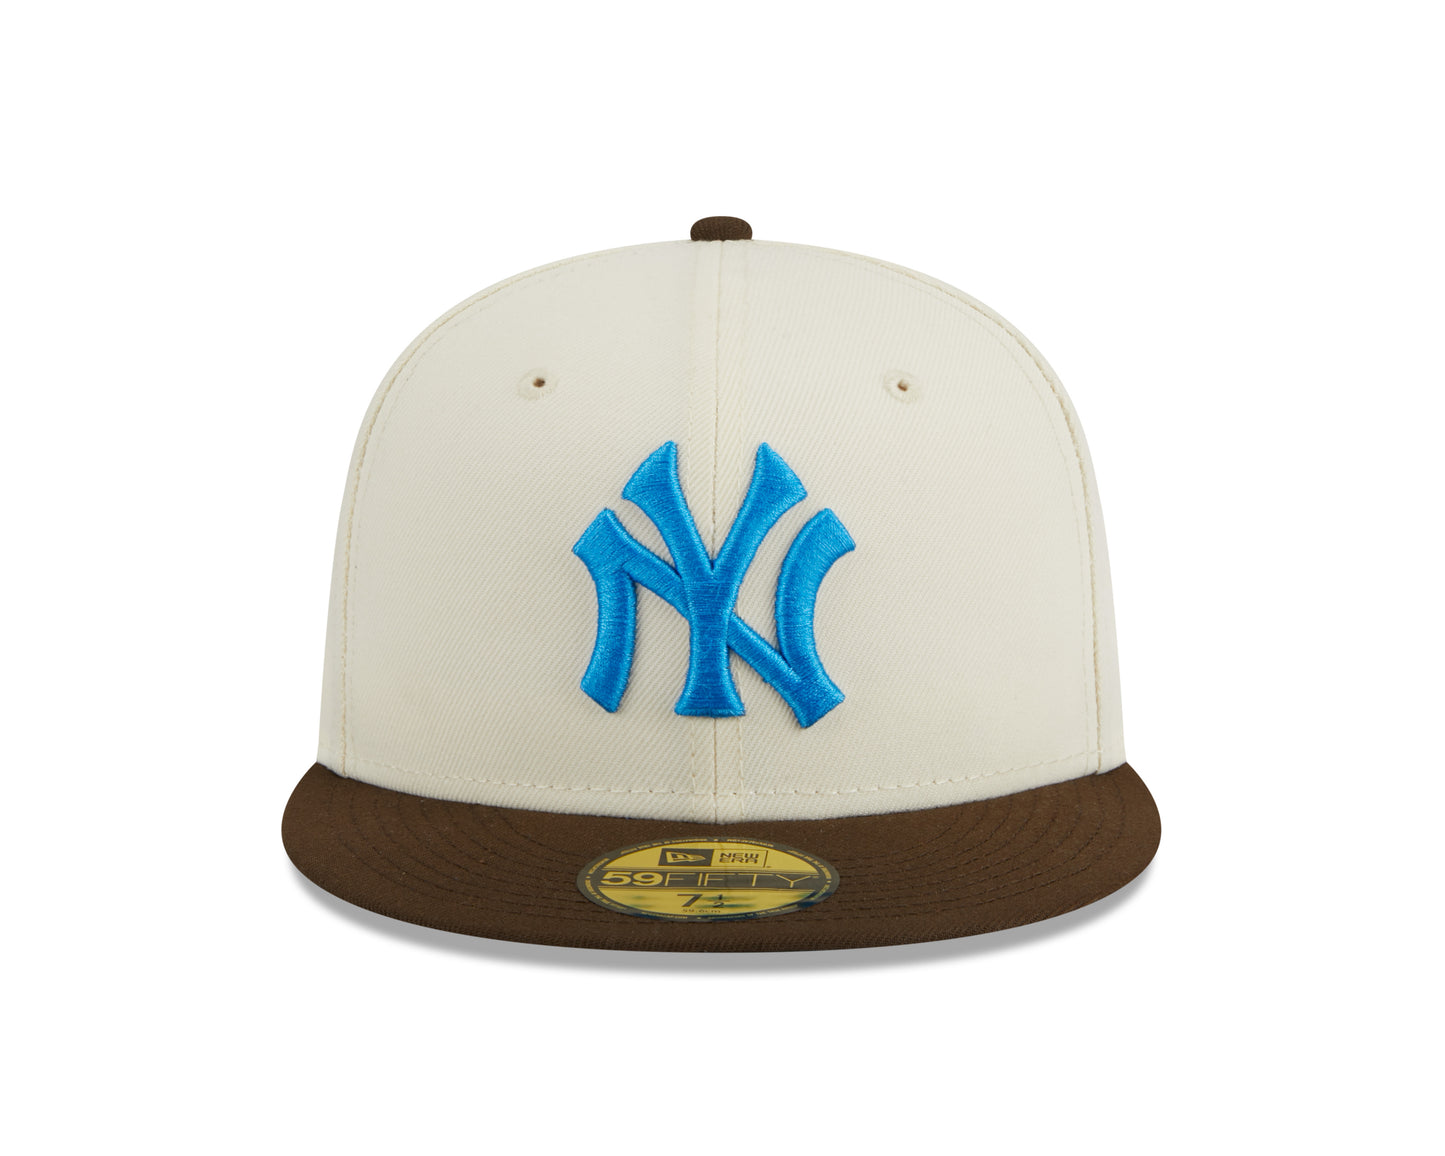 New Era - New York Yankees 59Fifty Fitted World Series 1949 - White/Brown - Headz Up 